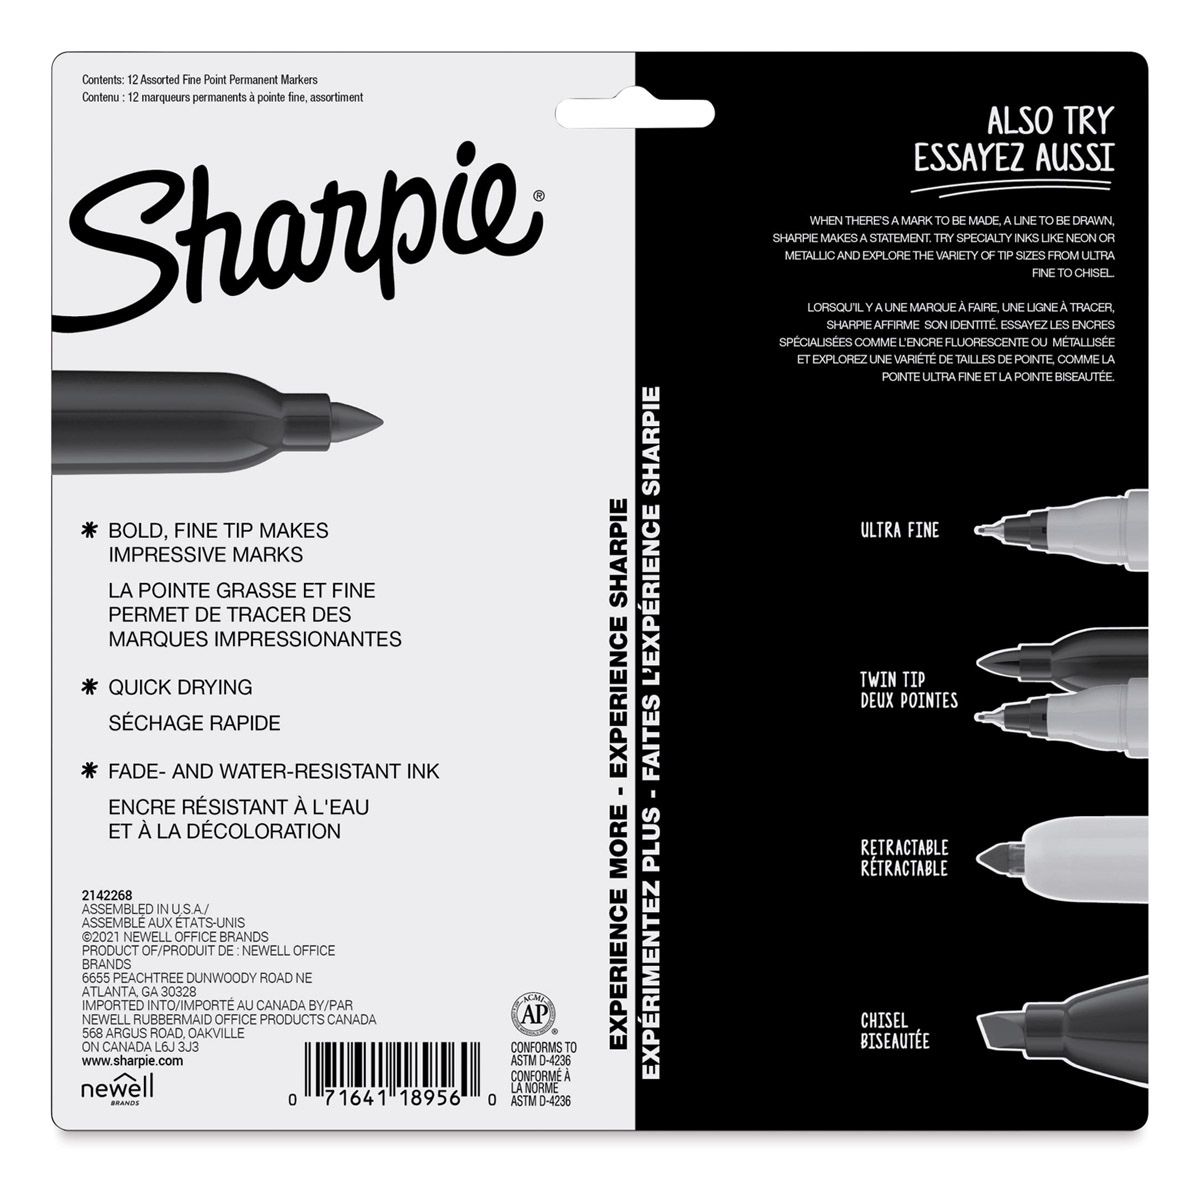 Sharpie® Mystic Gems Fine Point Permanent Markers, 12 pk - Baker's